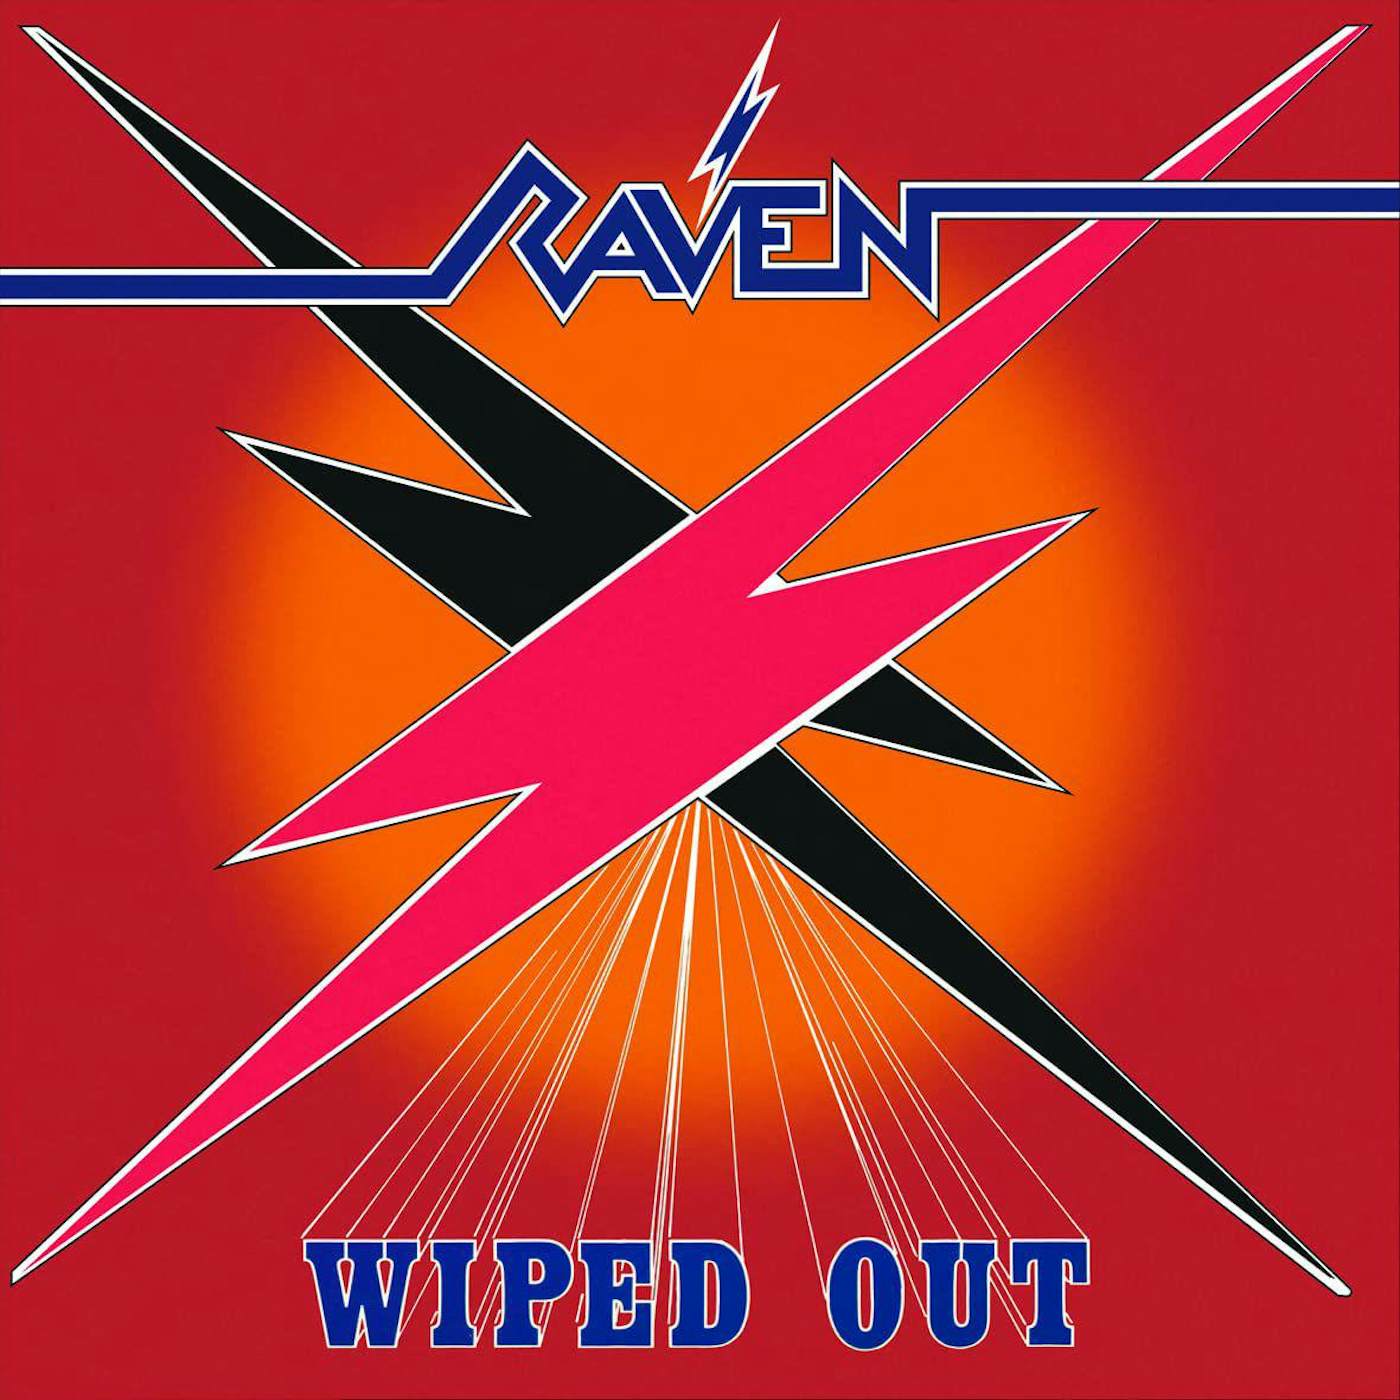 Raven Wiped Out (Blue Smoke) Vinyl Record